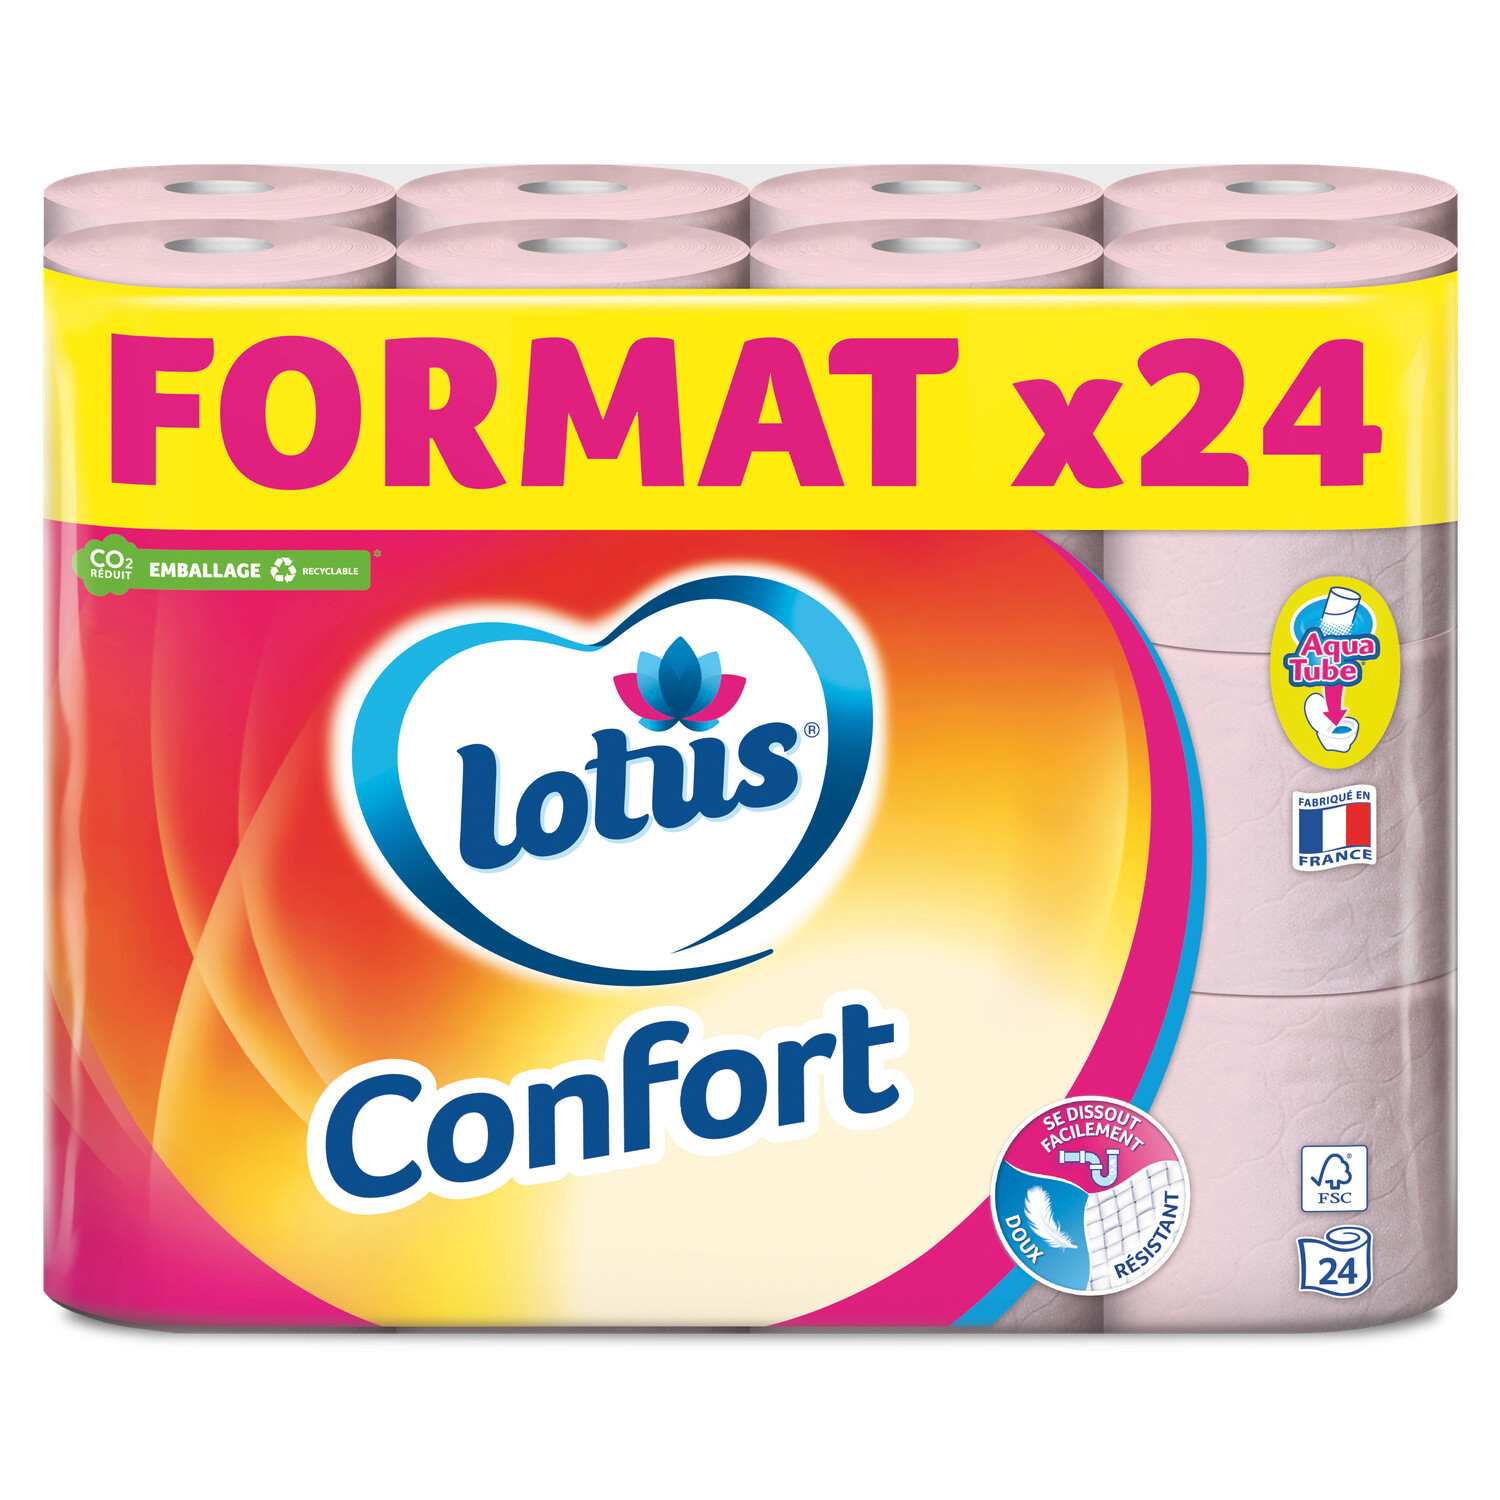 Lotus white Toilet paper Confort x24 rolls